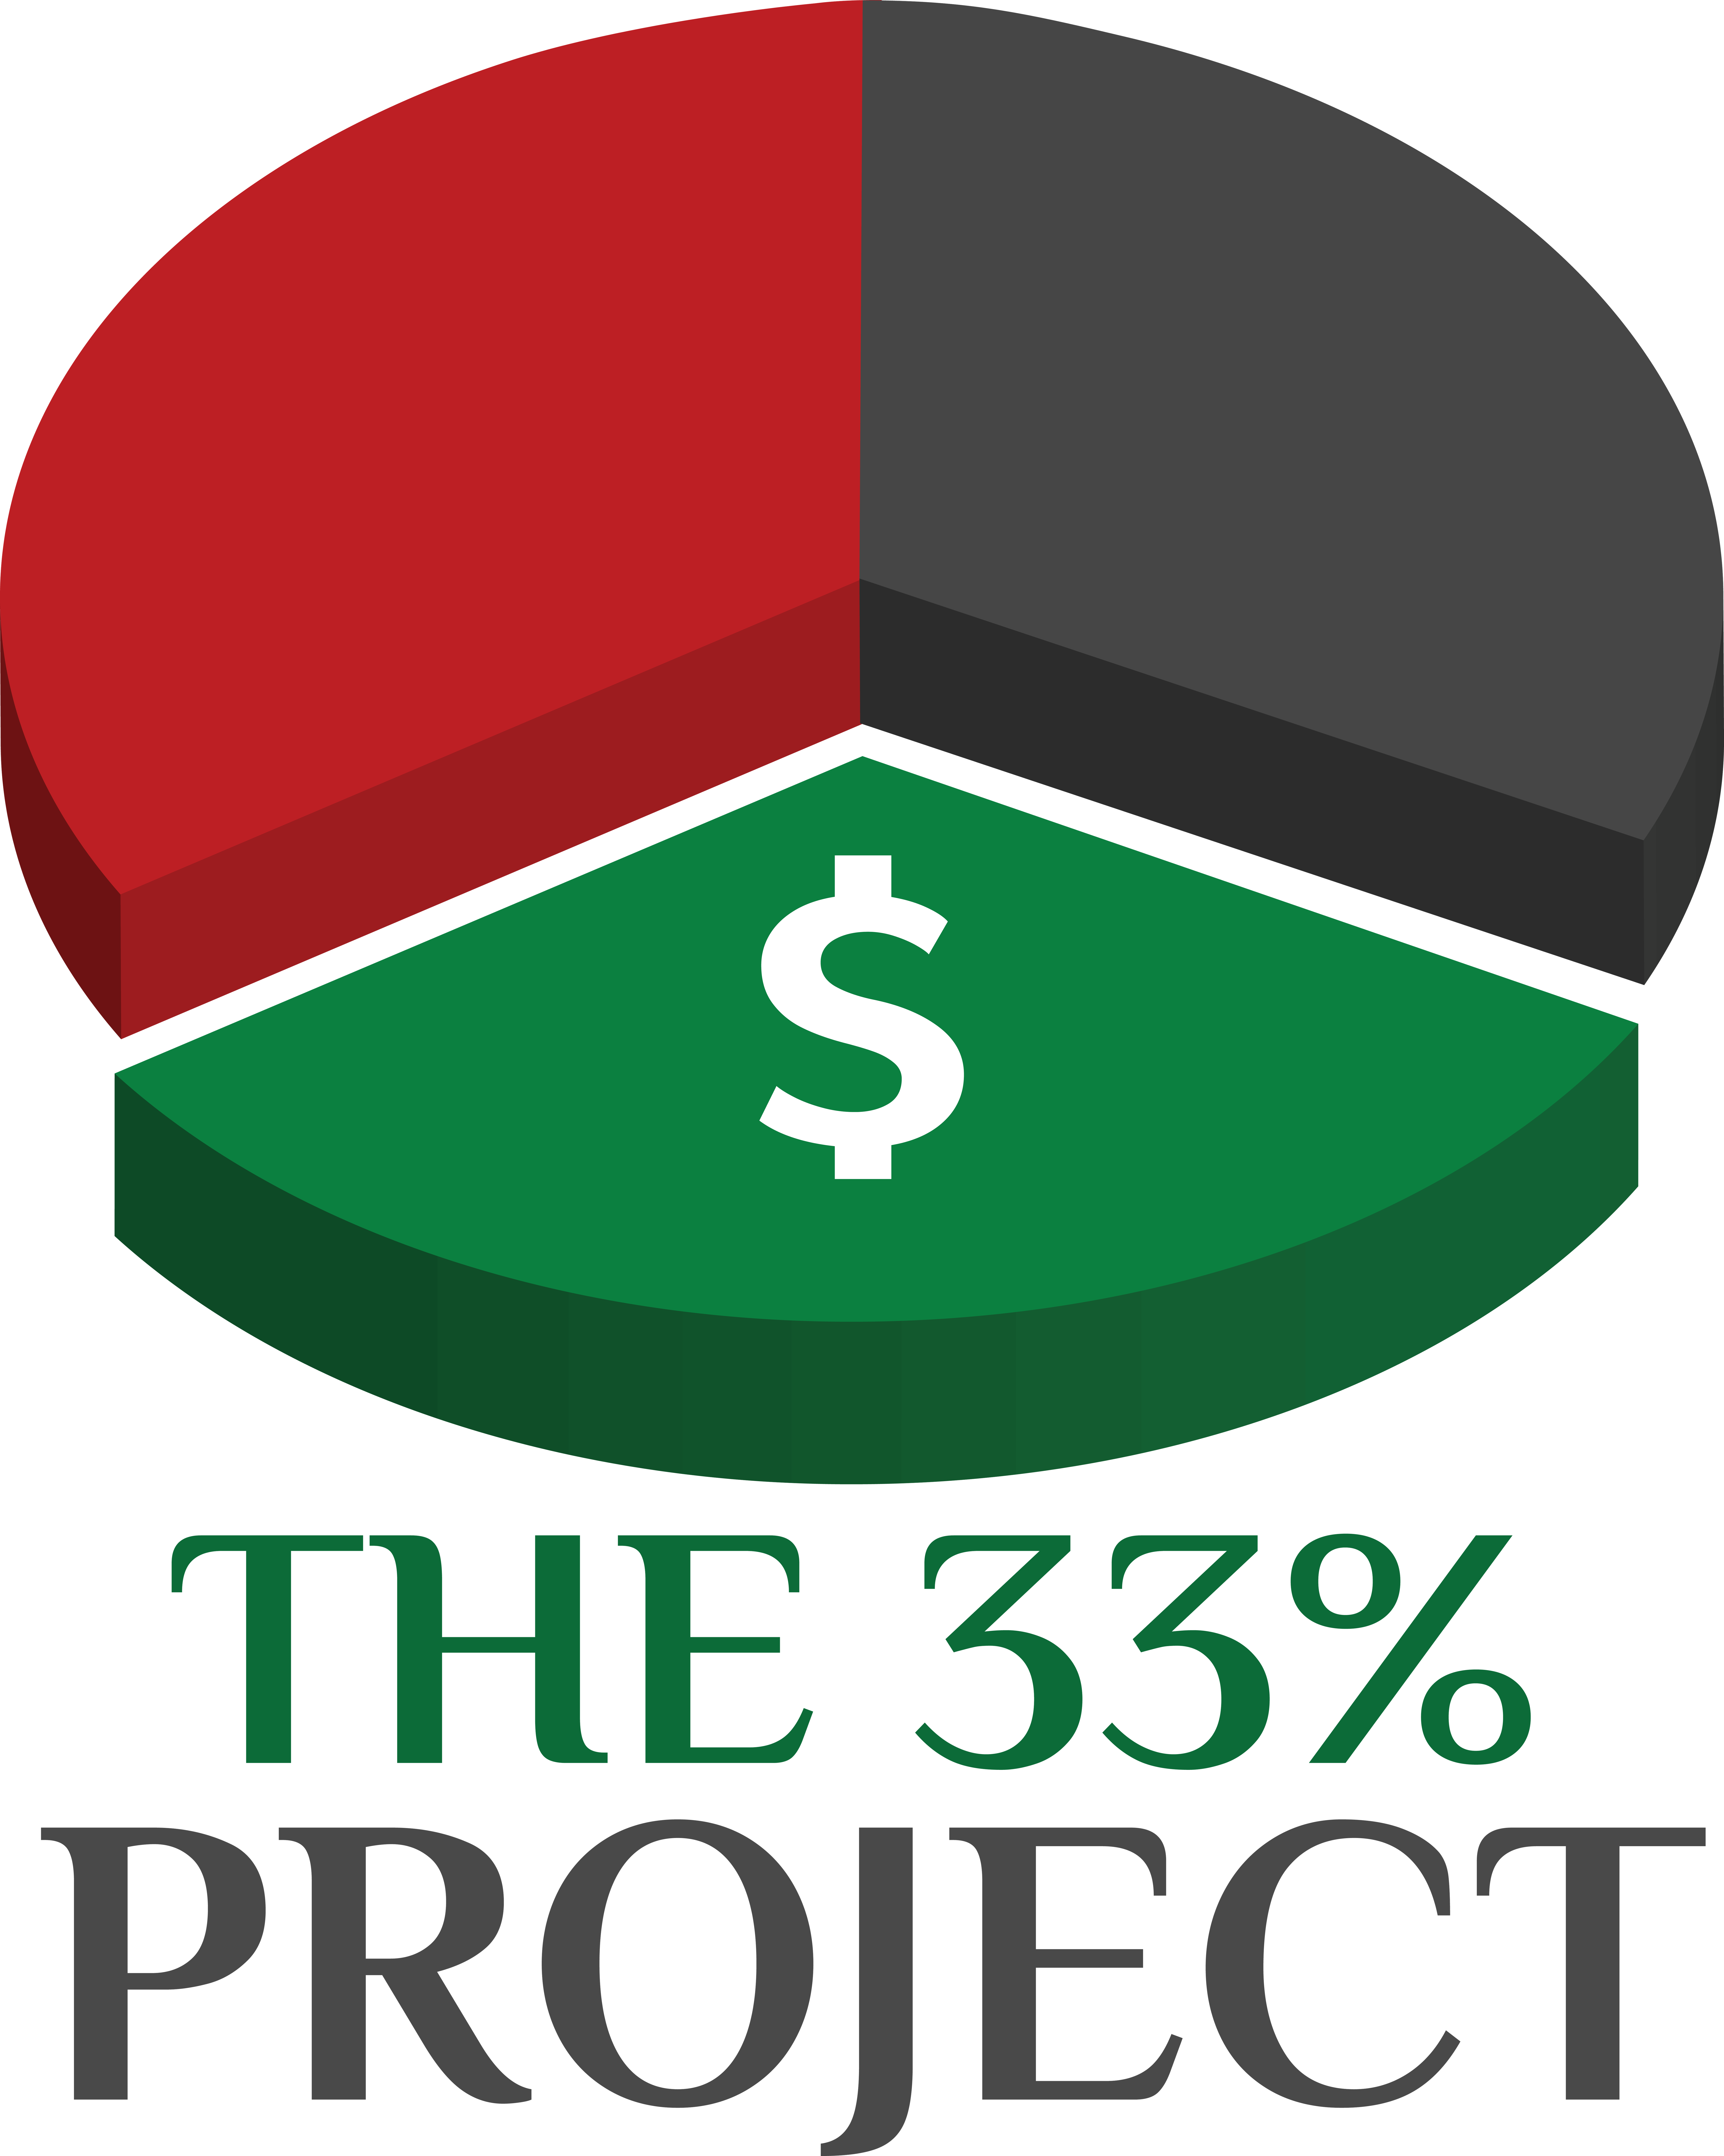 The 33 percent project logo final